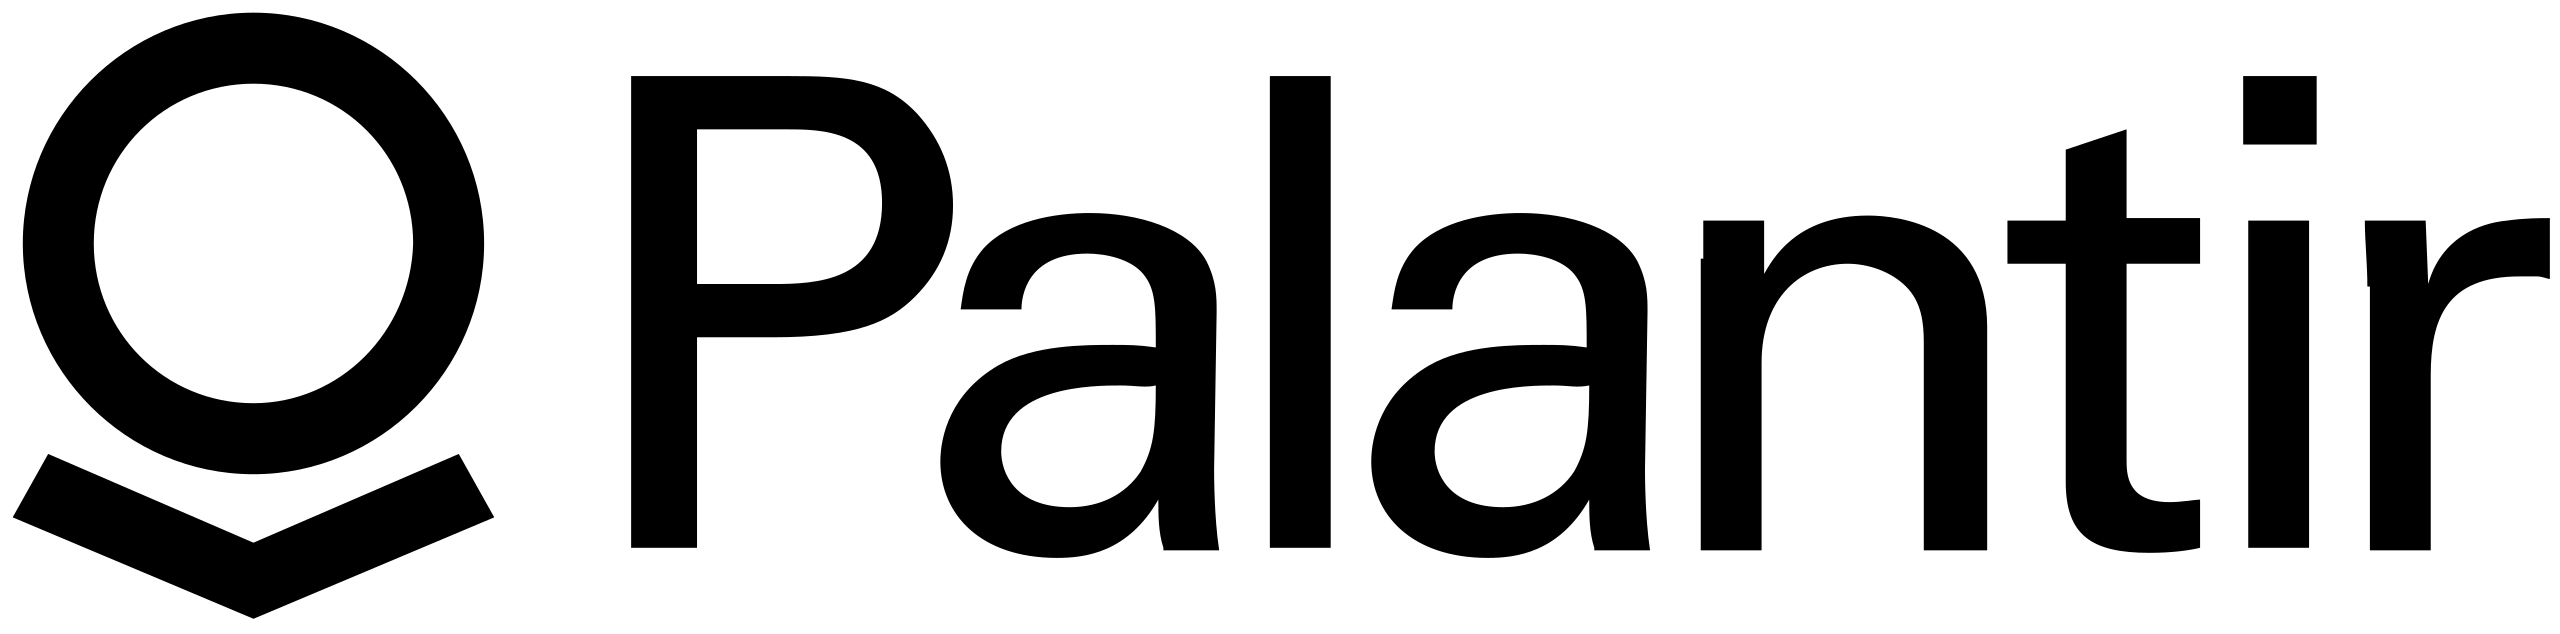 File:Palantir Technologies logo.svg - Wikimedia Commons